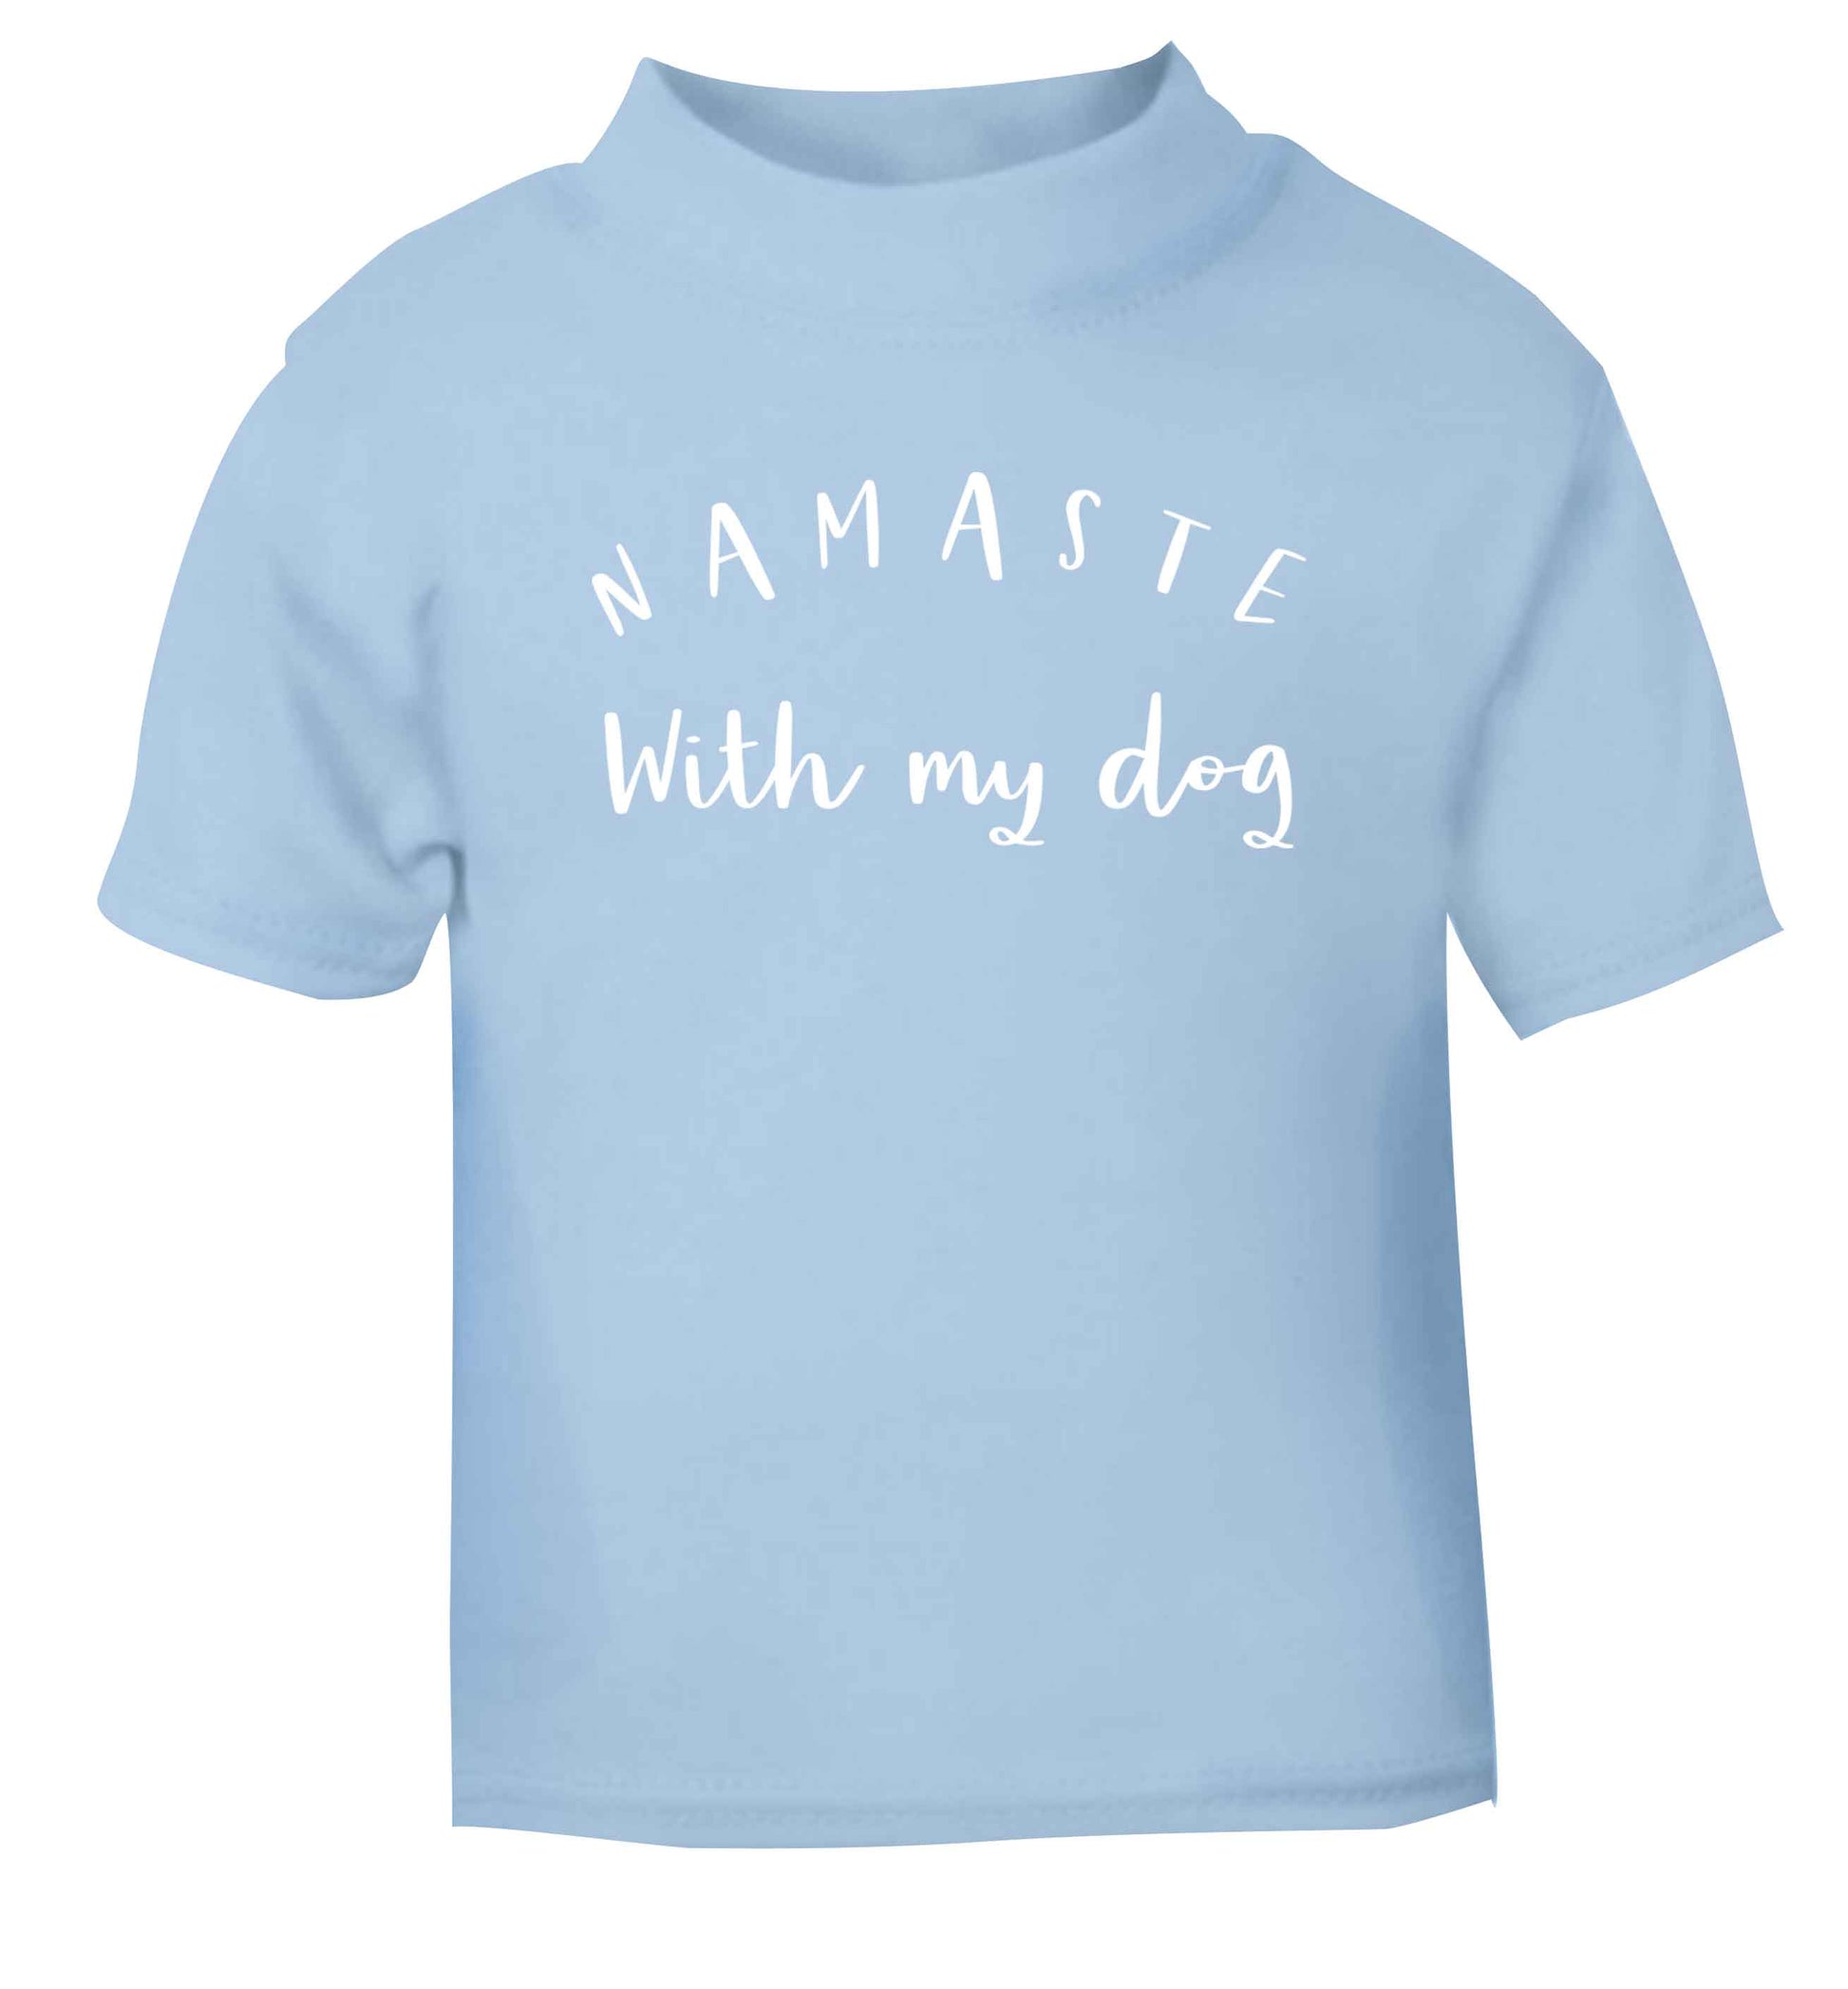 Namaste with my dog light blue Baby Toddler Tshirt 2 Years